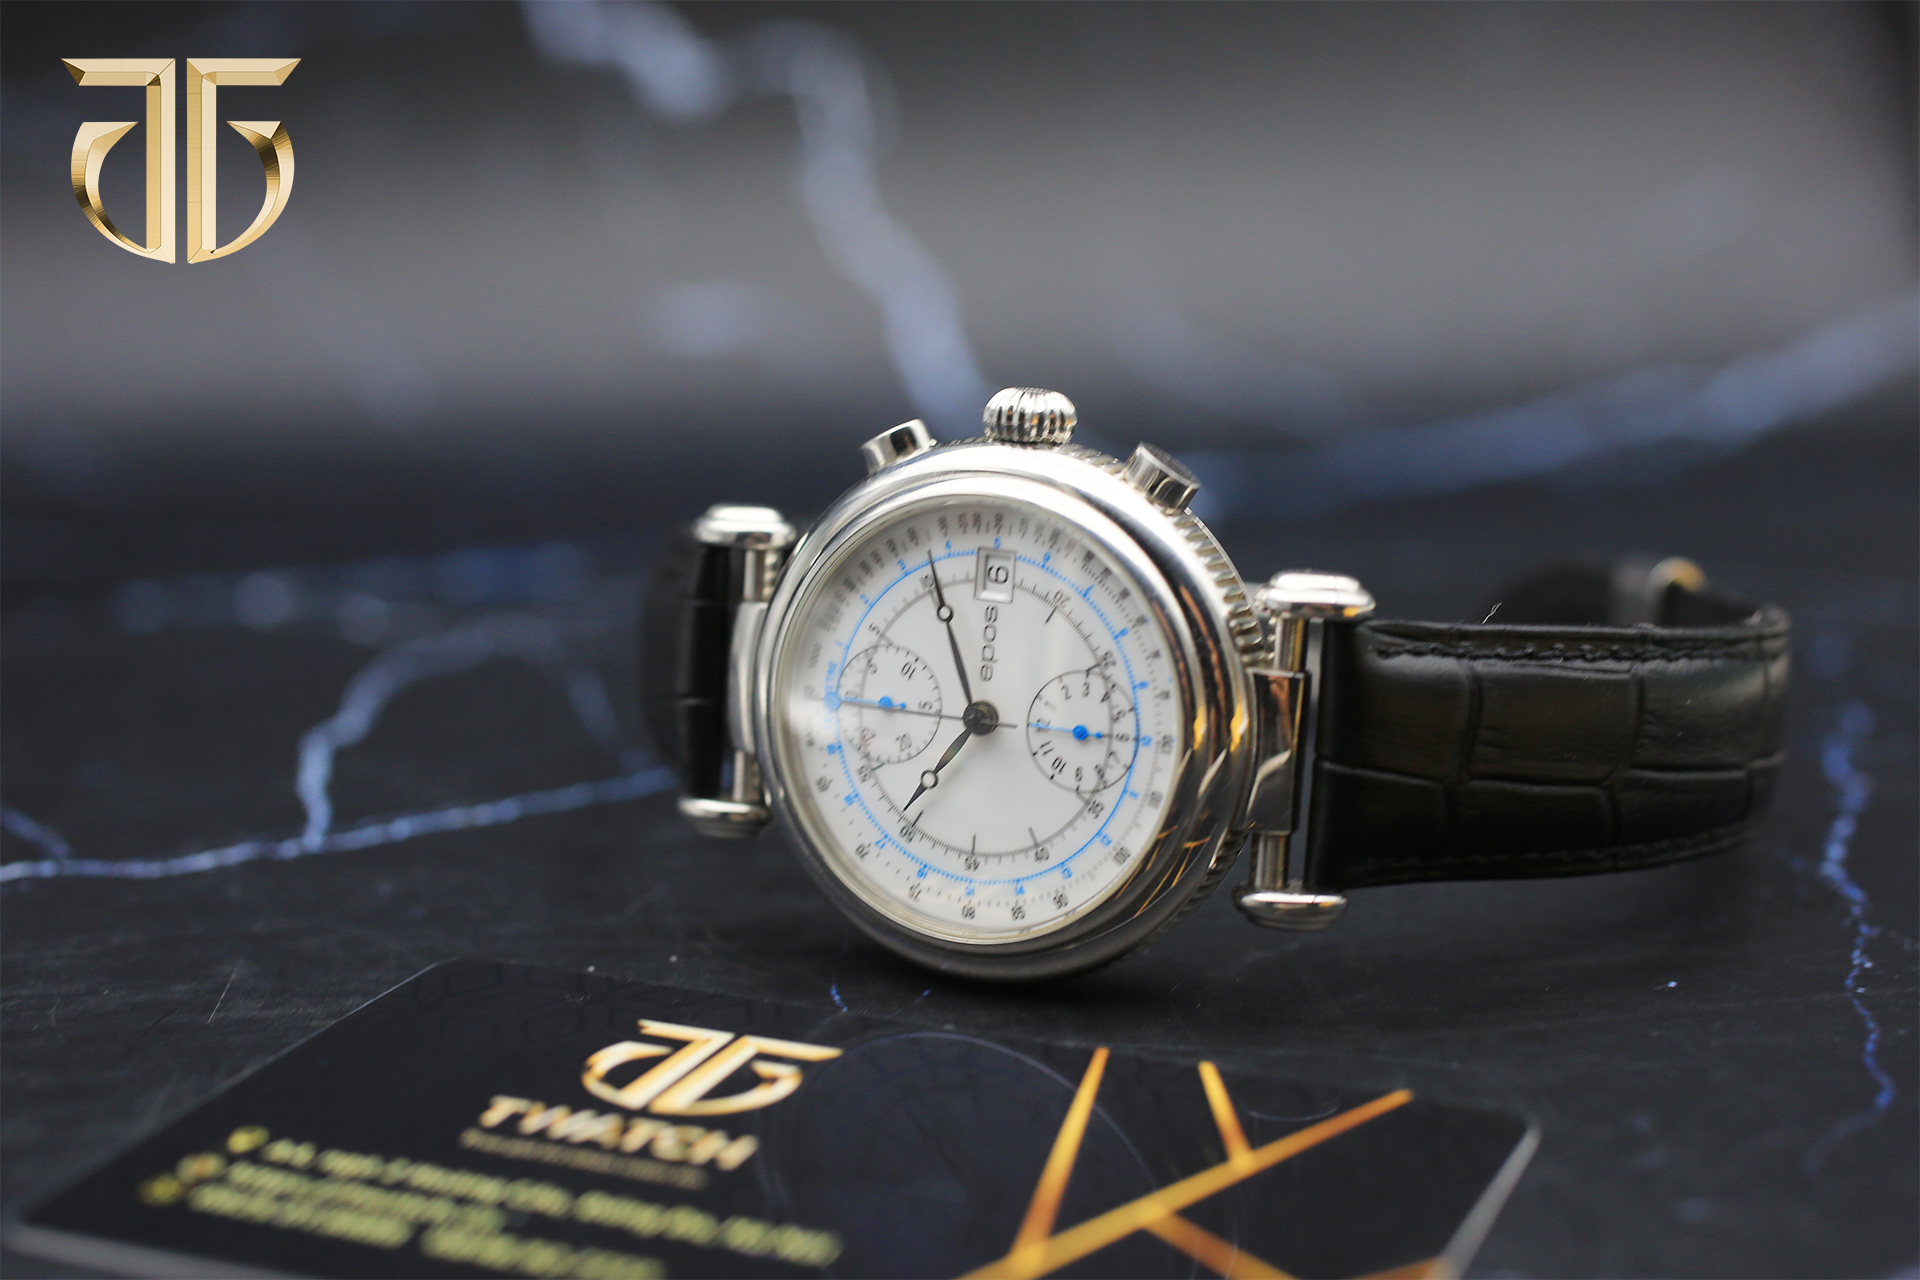 Đồng hồ Orient Star Retro-Future WZ0231DK | Đồng hồ nhật Quang Lâm.